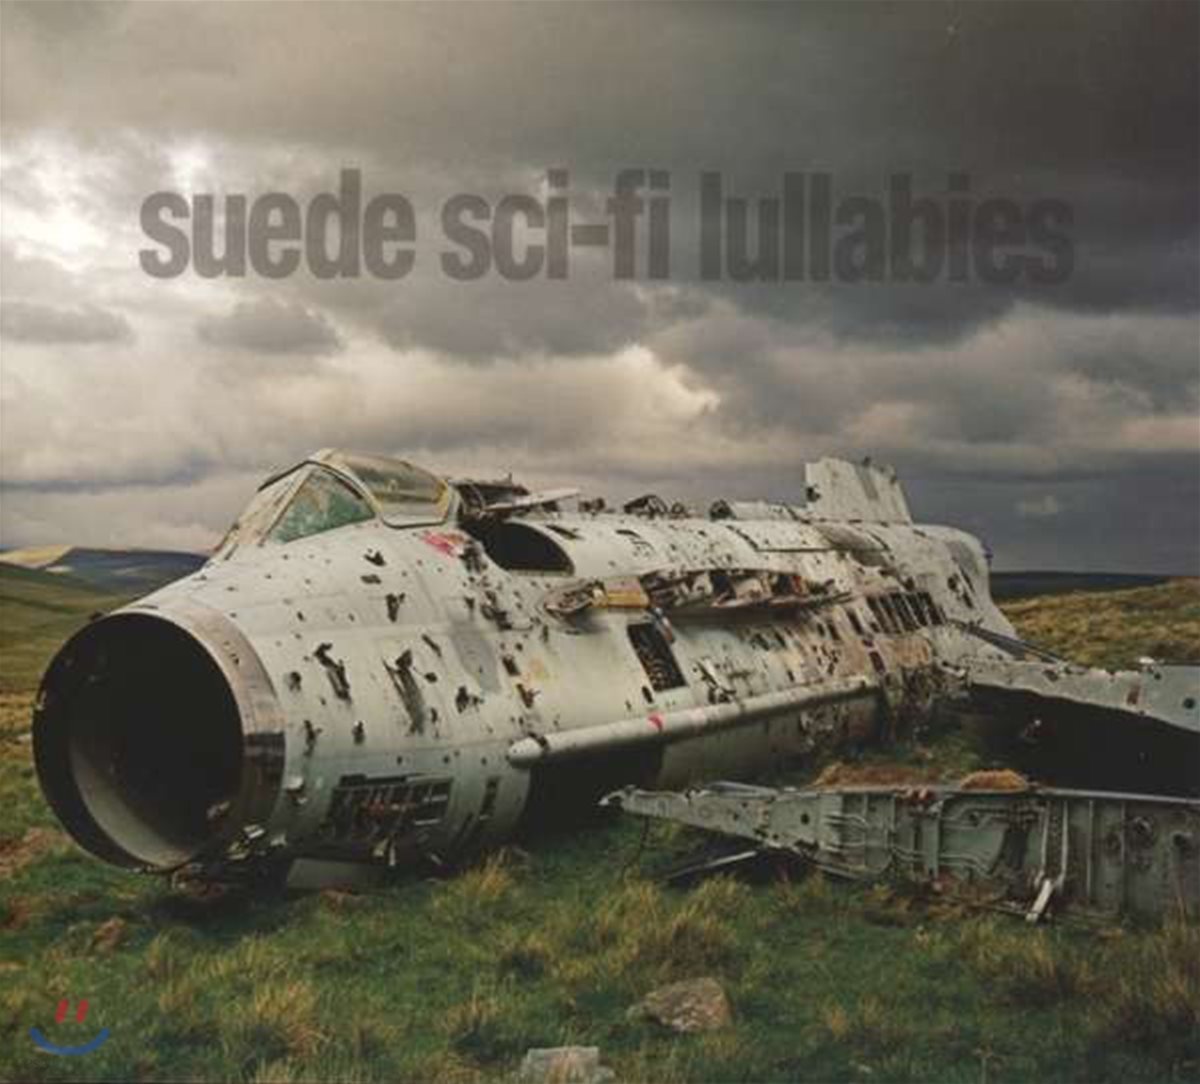 Suede - Sci-Fi Lullabies 스웨이드 B사이드 모음집 [Deluxe Edition]